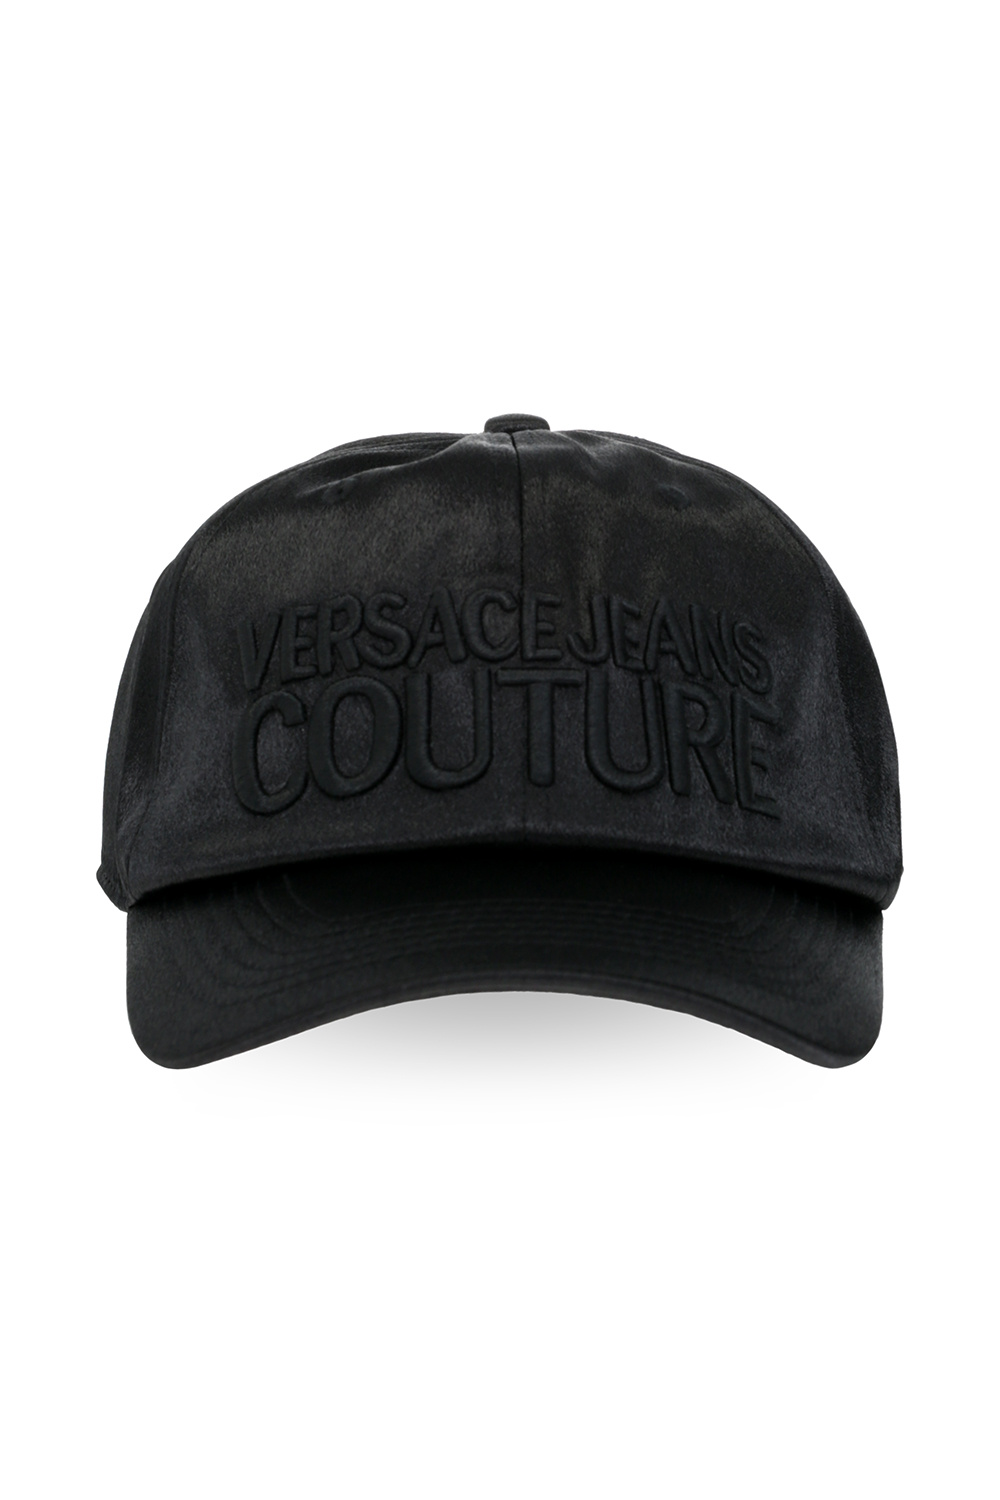 Versace Jeans Couture Satin baseball cap